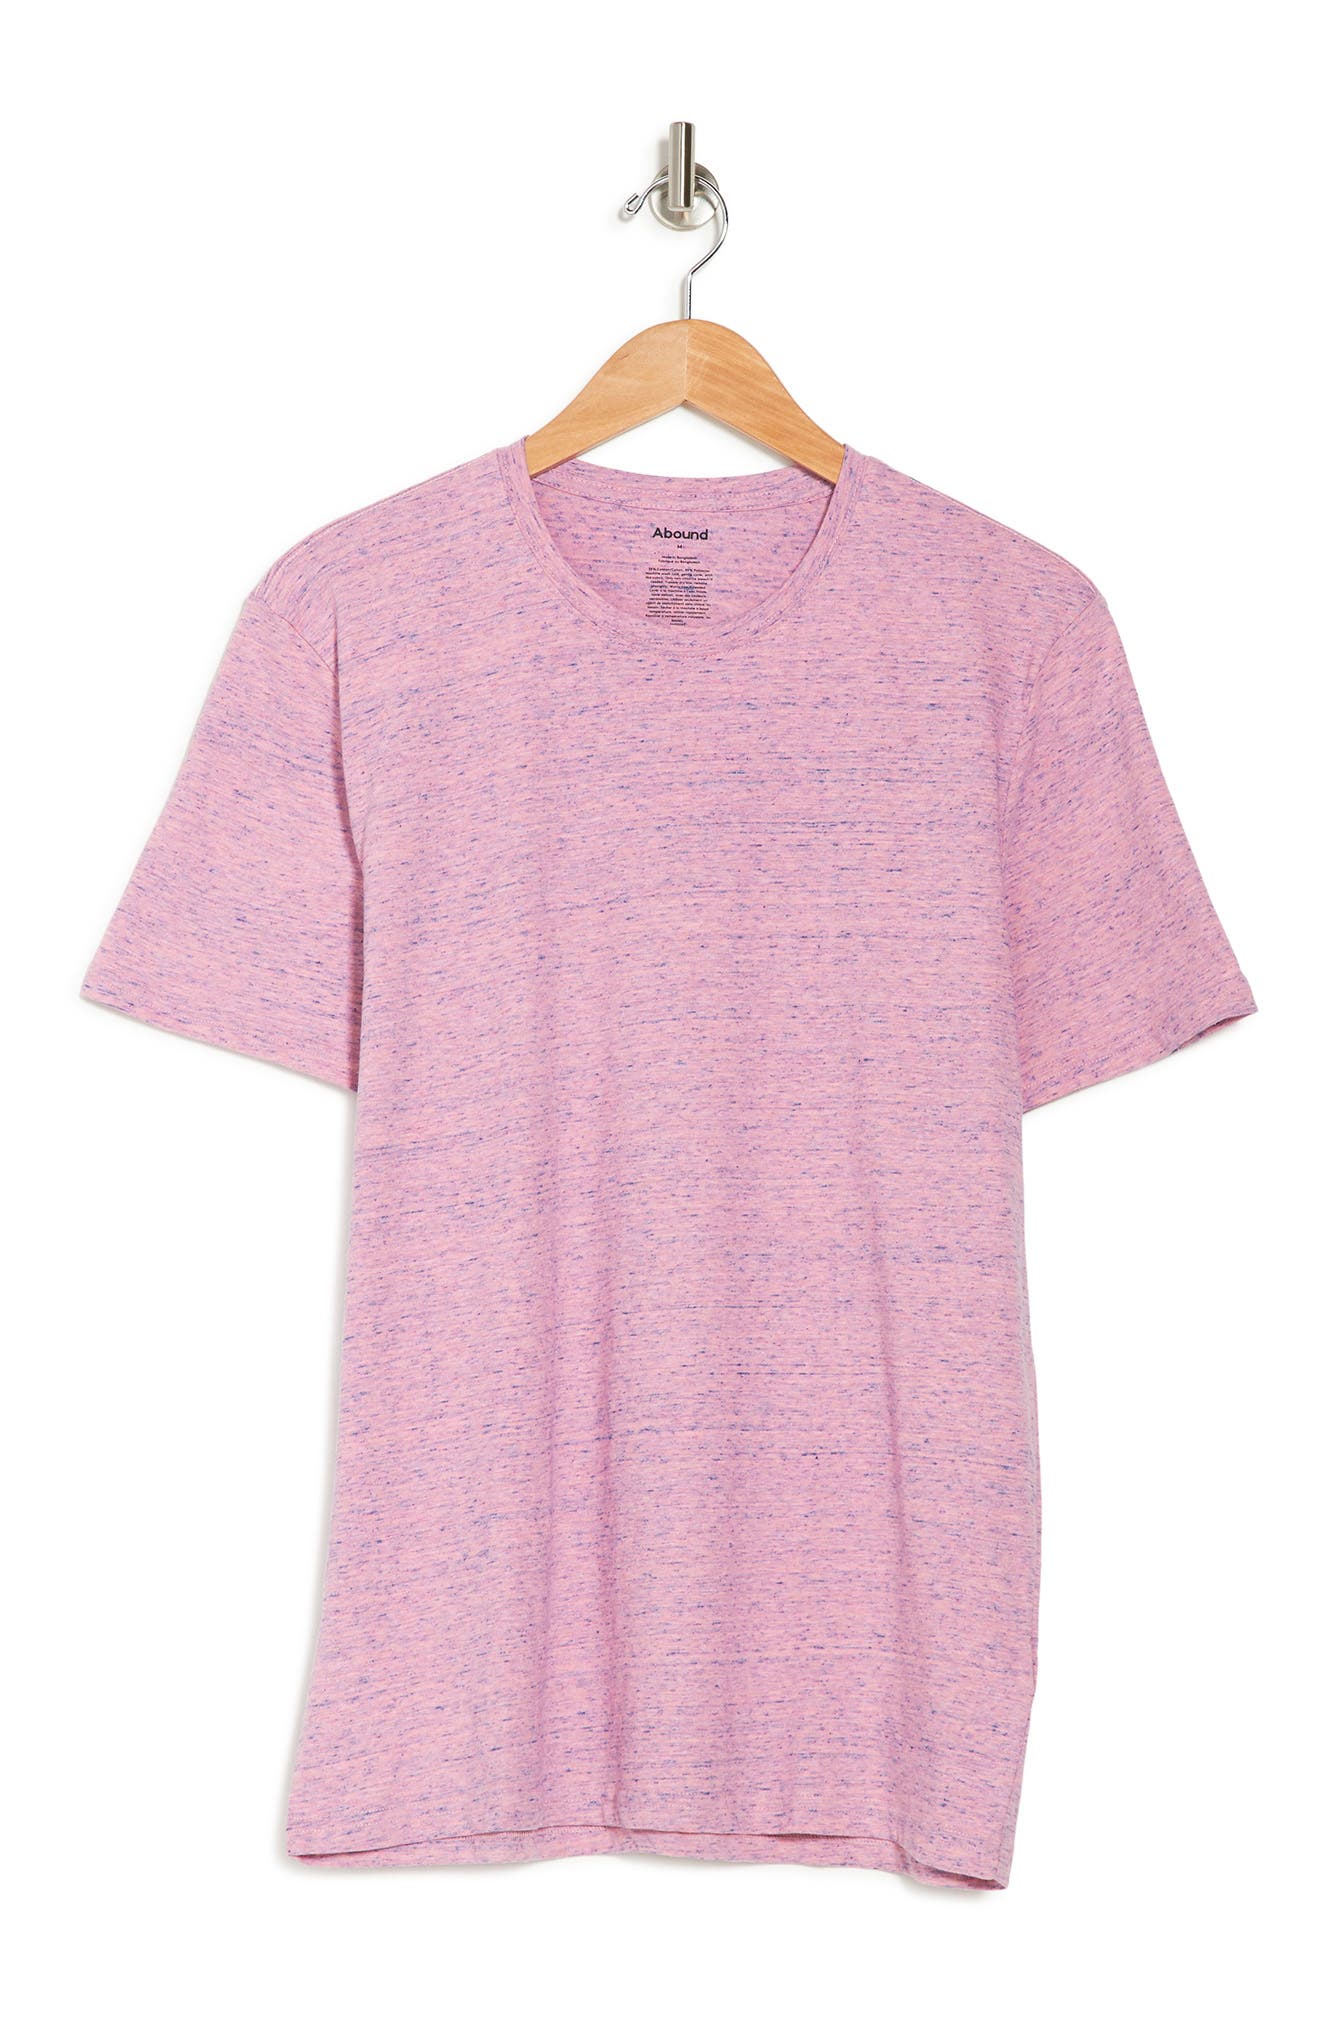 Abound Heathered Crew Neck Short Sleeve T-shirt In Pink Reverse Chill Hthr